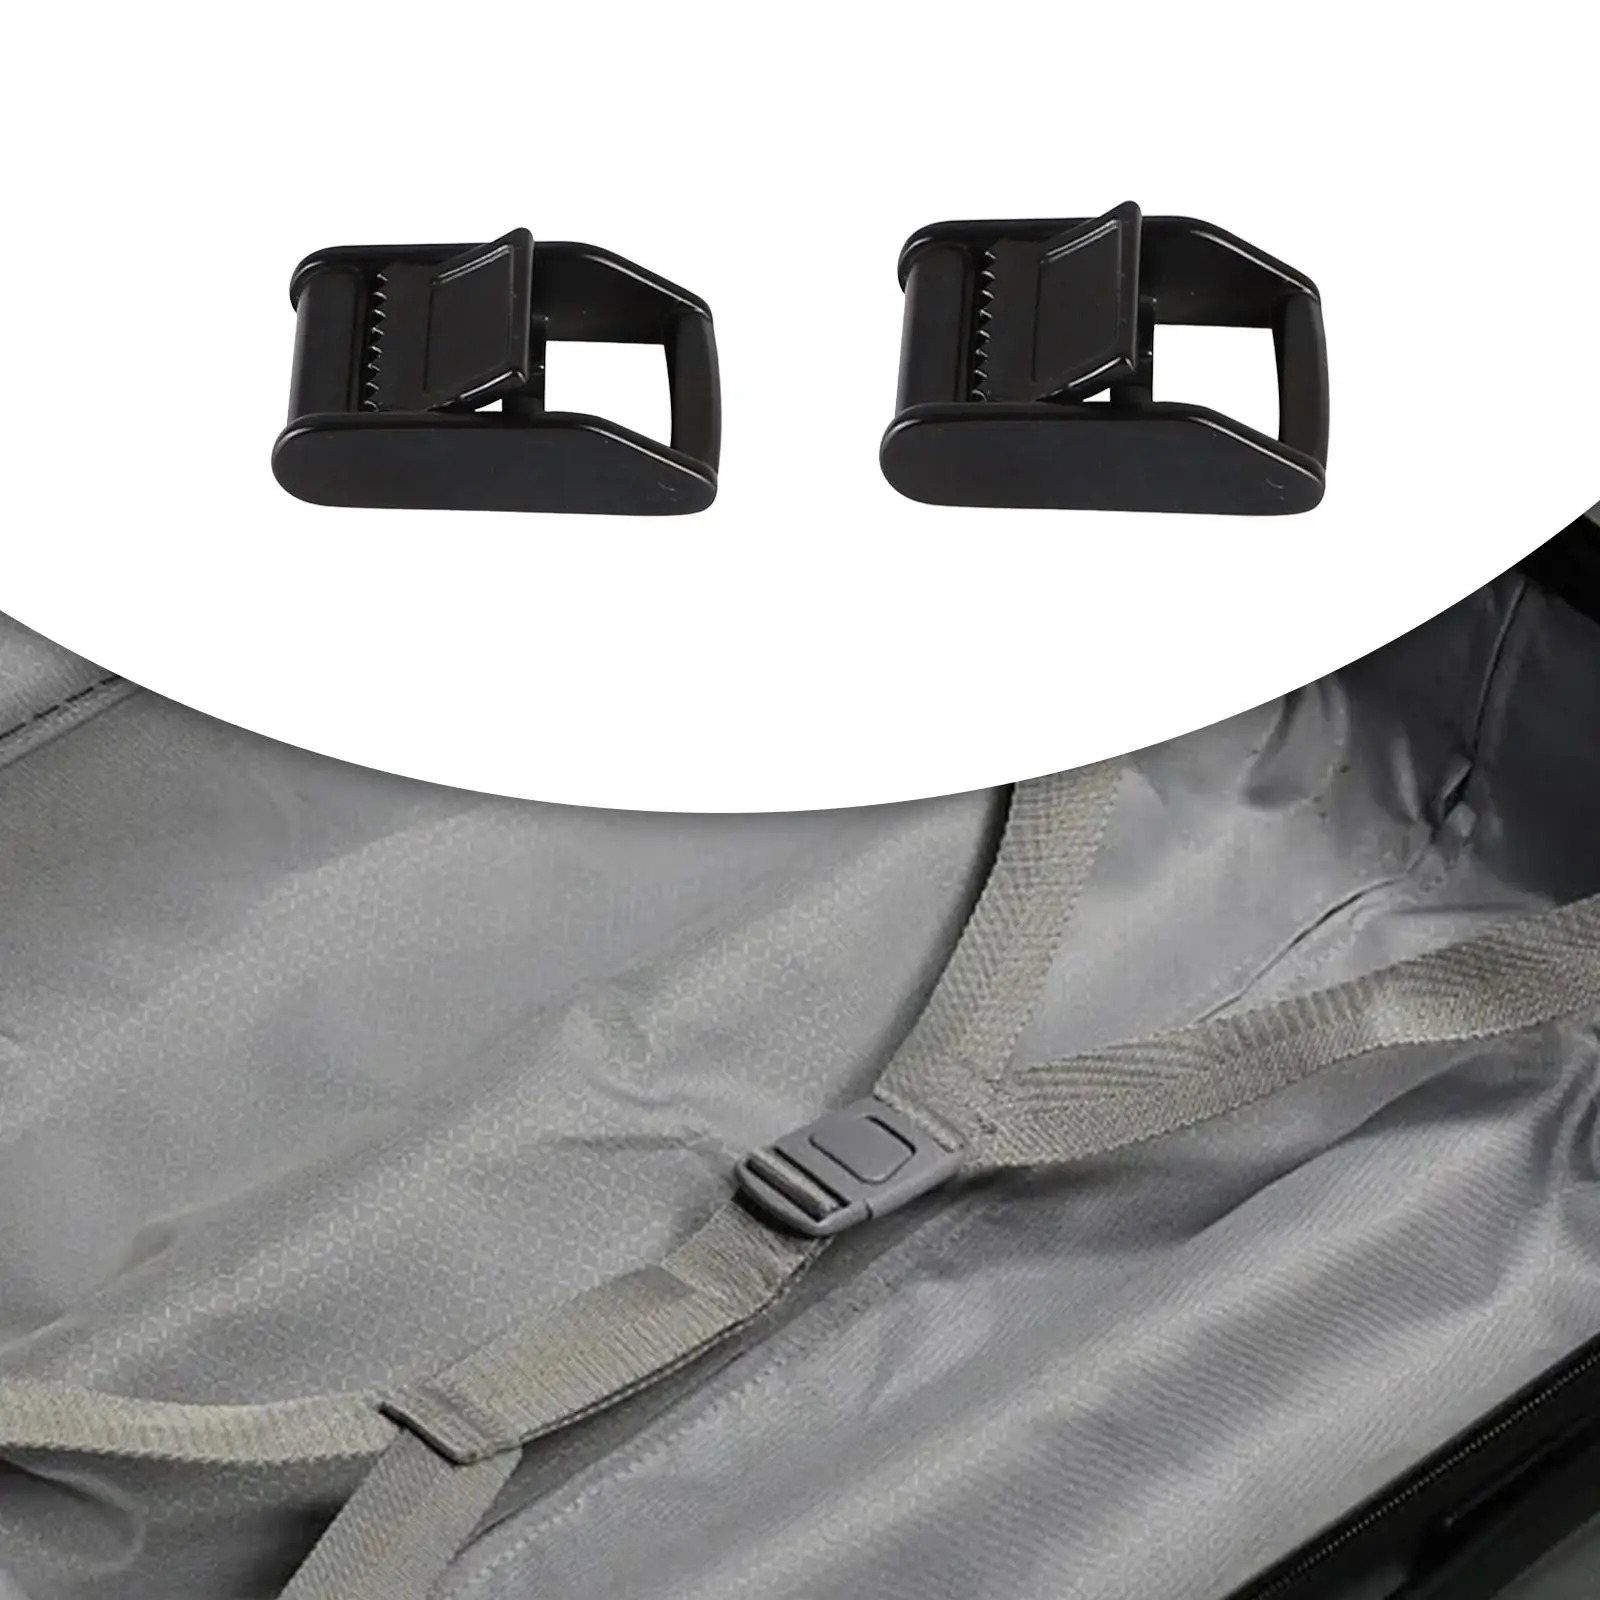 Webbing Buckle Sturdy Belt Buckle Hardware Binding Buckle for DIY Accessories Crafts Making Cargo Lashing Tightening Bags